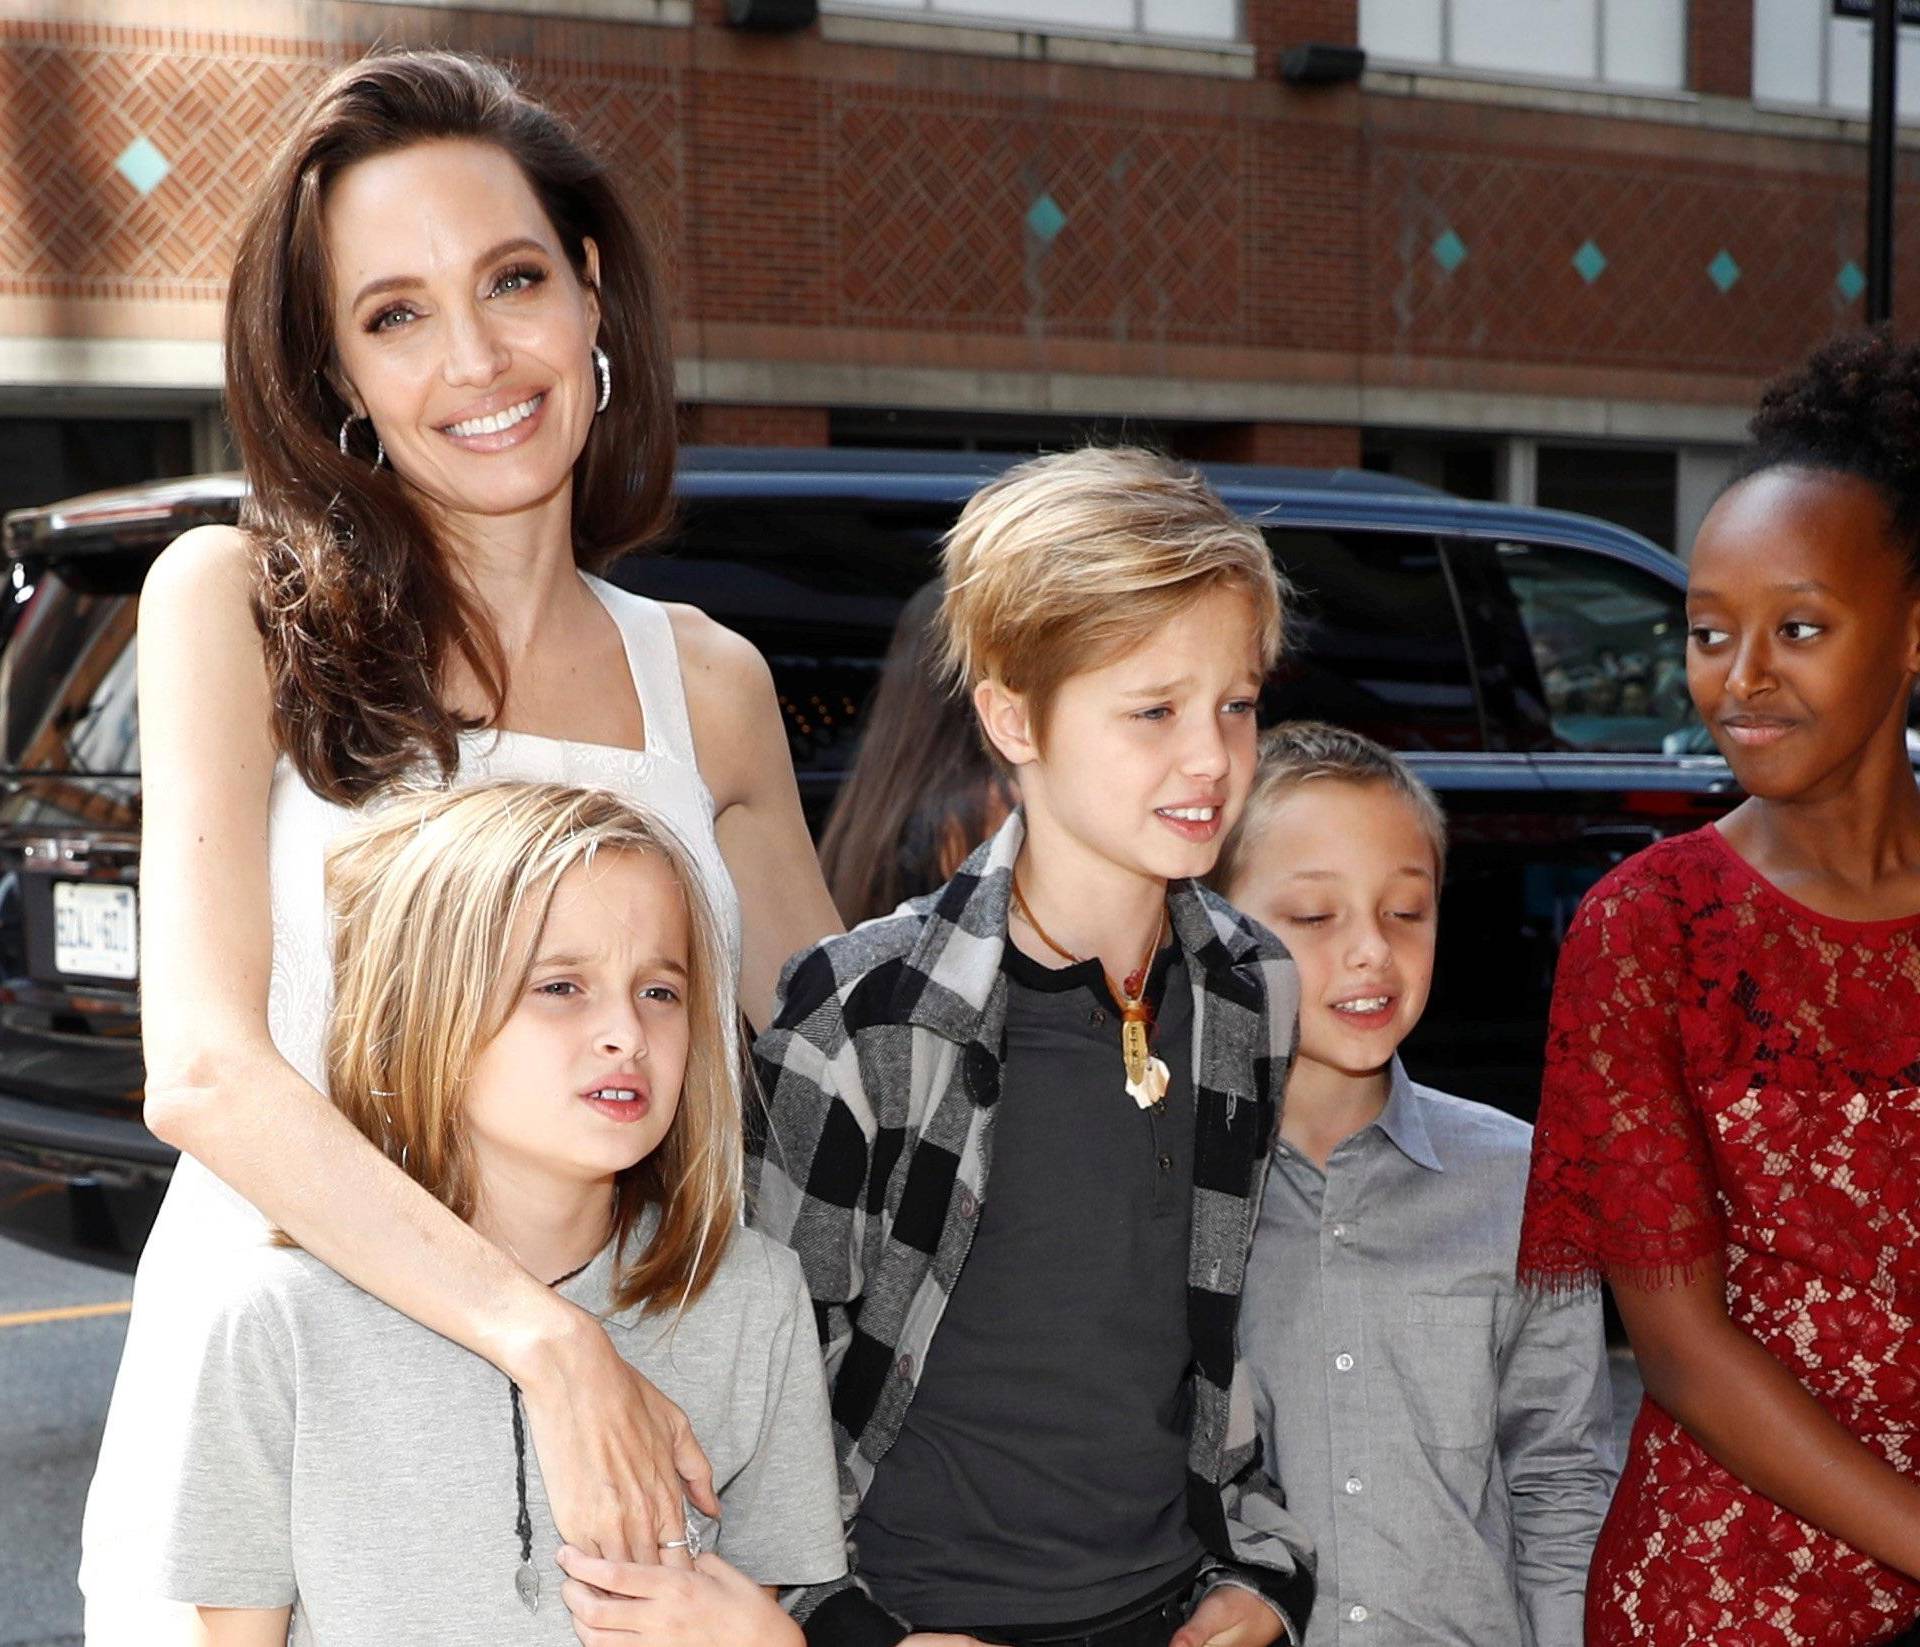 Jolie arrives on the red carpet with her children for the film "The Breadwinner" during the Toronto International Film Festival in Toronto